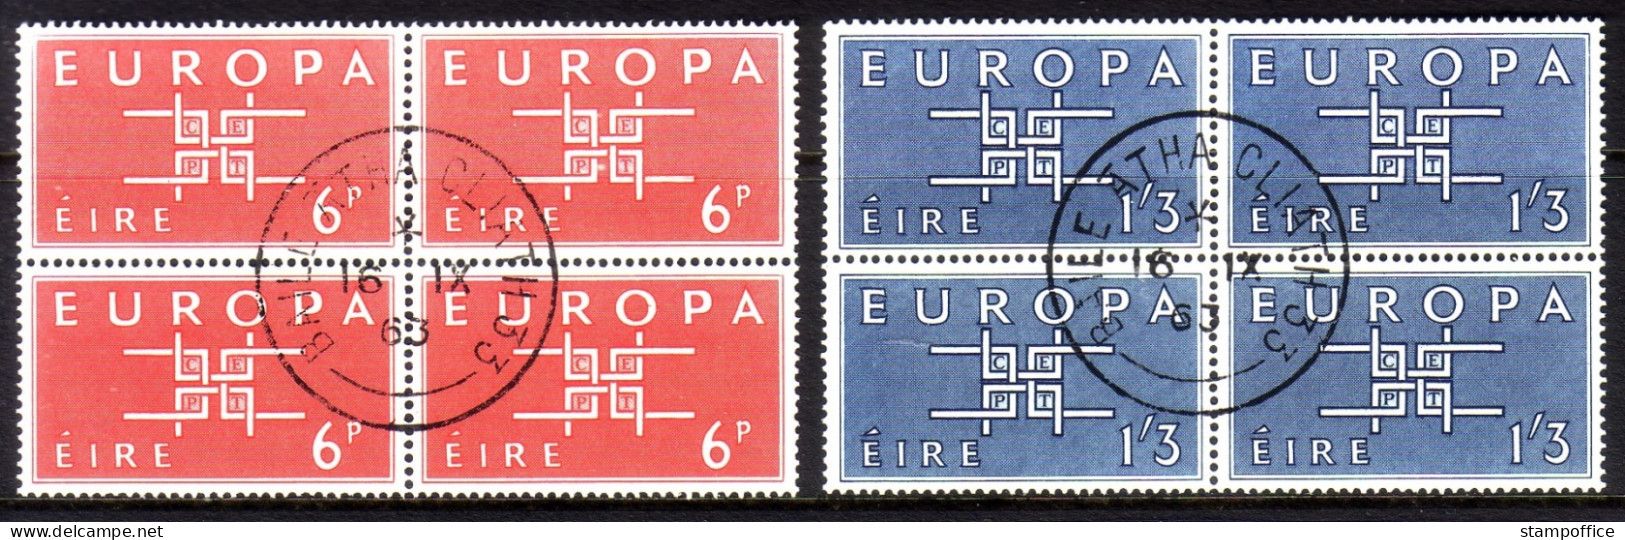 IRLAND MI-NR. 159-160 GESTEMPELT(USED) 4er BLOCK EUROPA 1963 - 1963